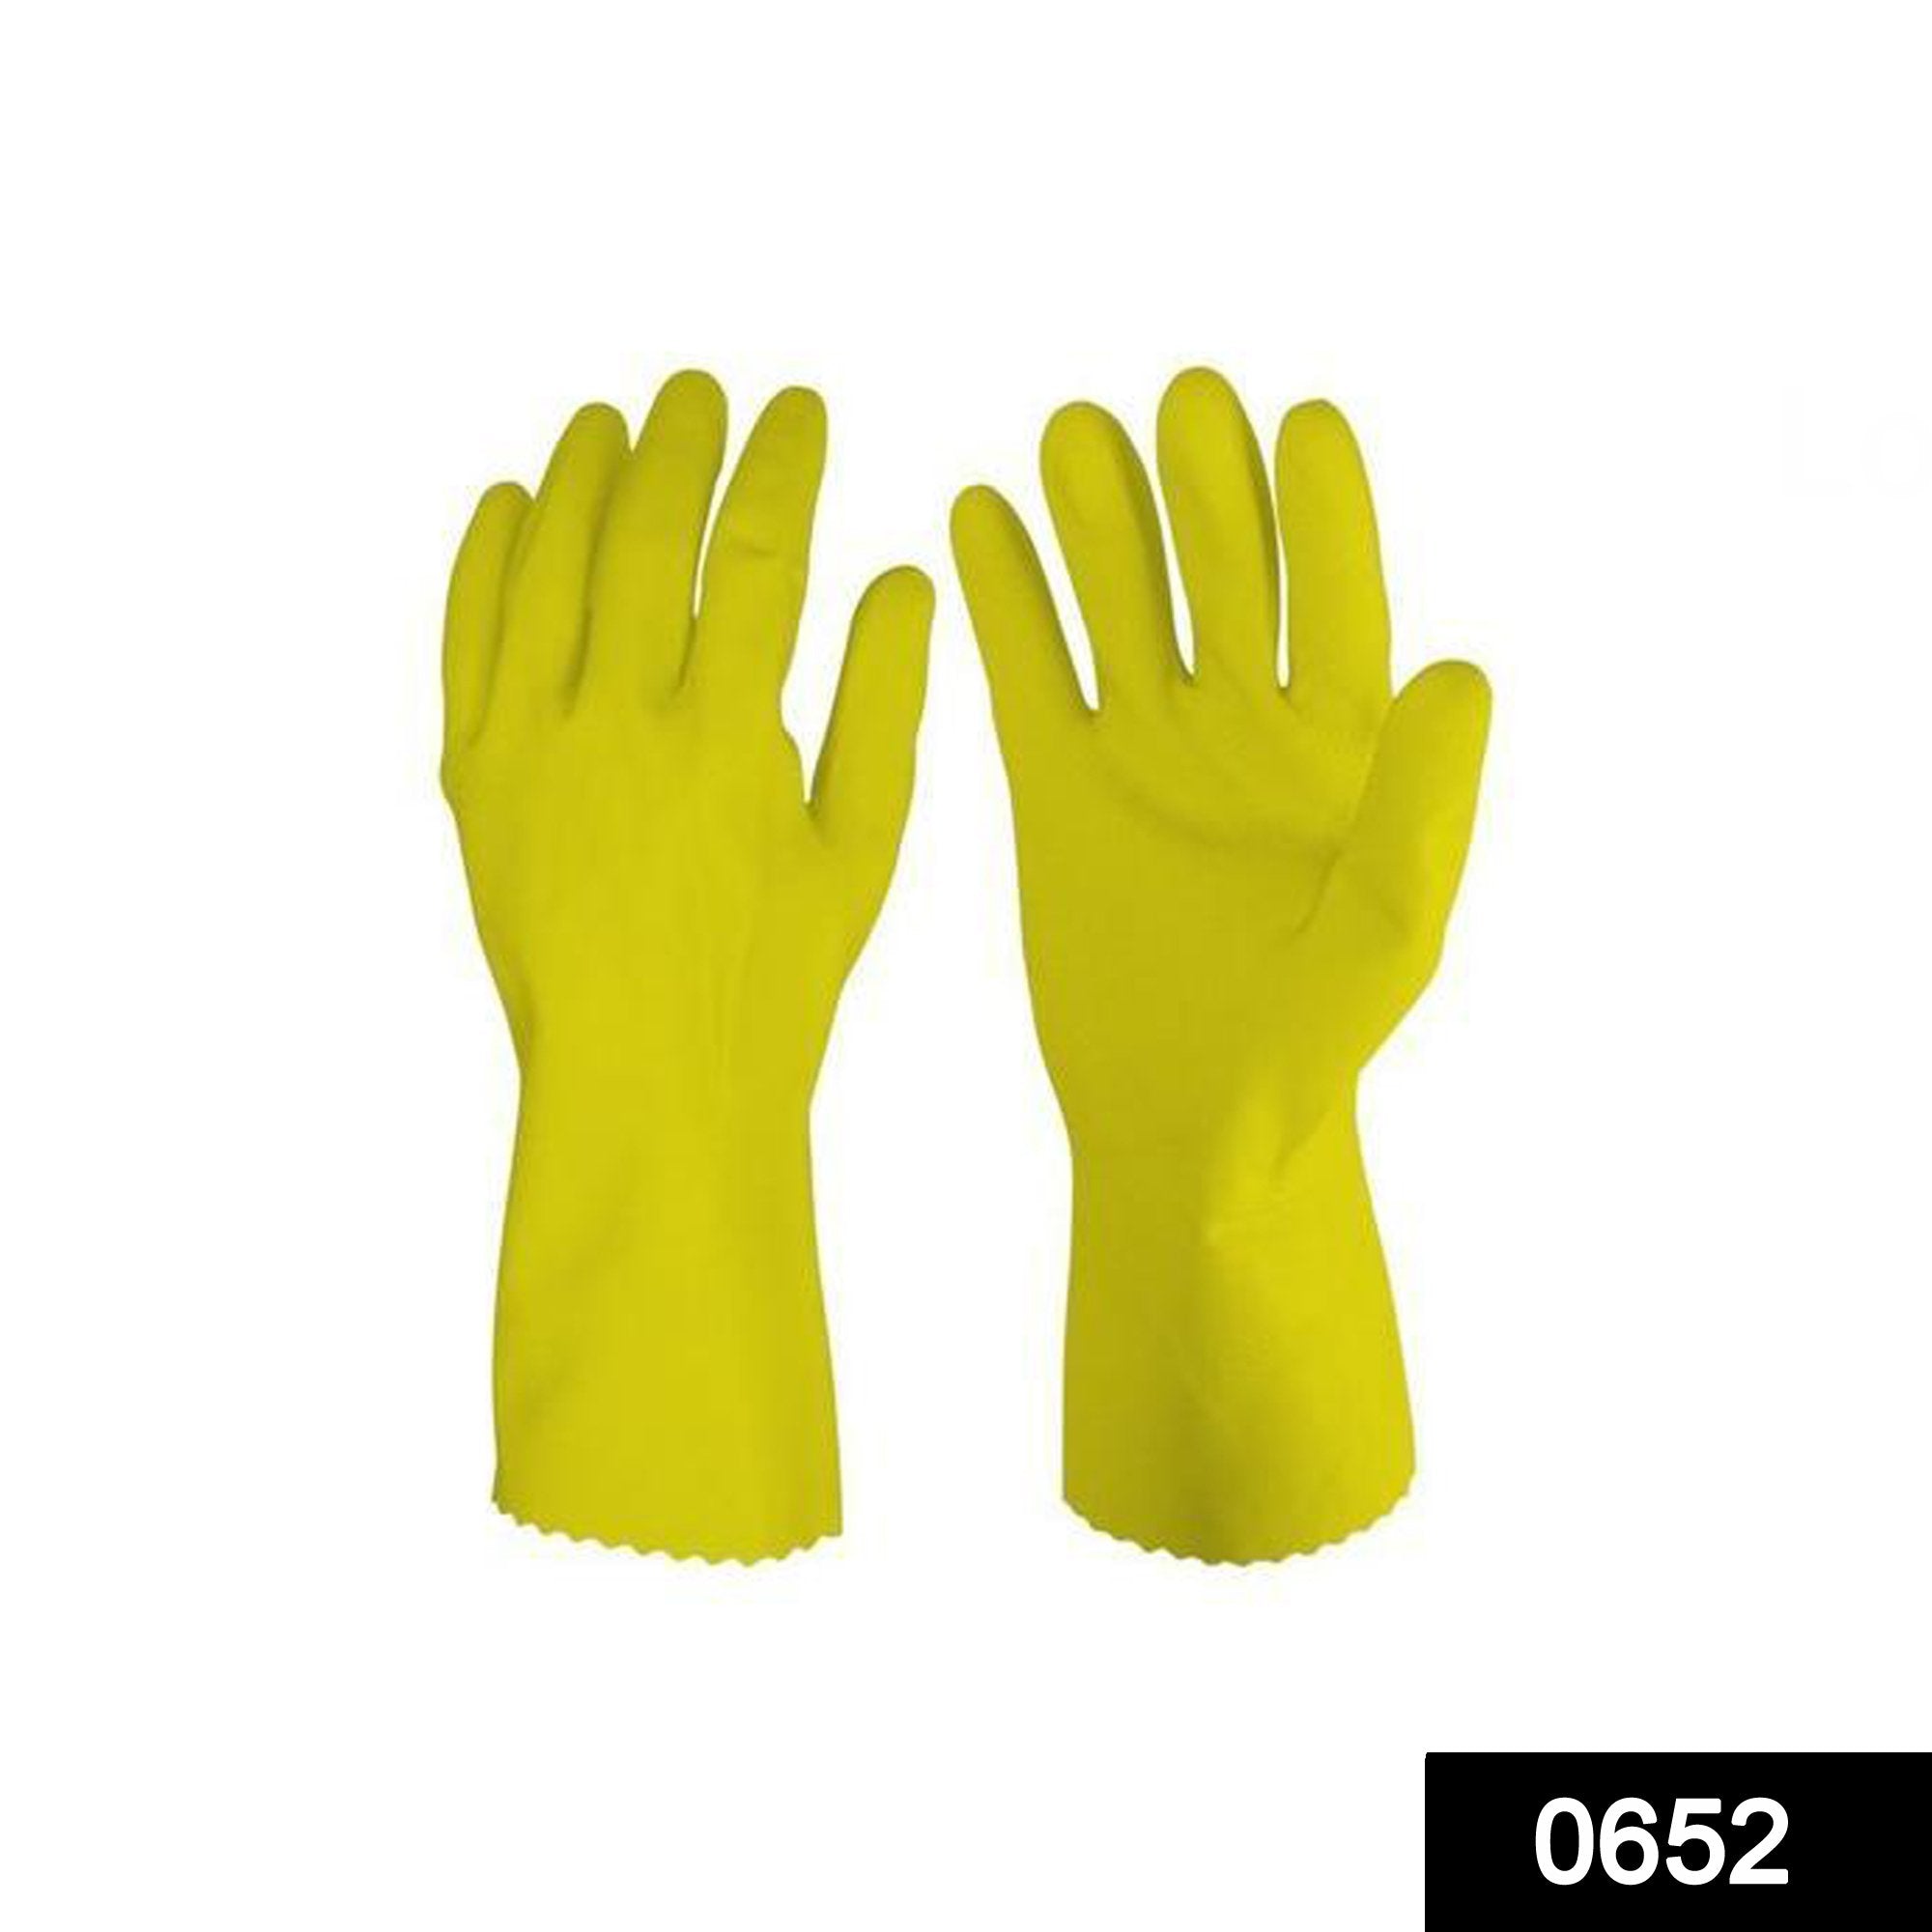 652 cut gloves yellow